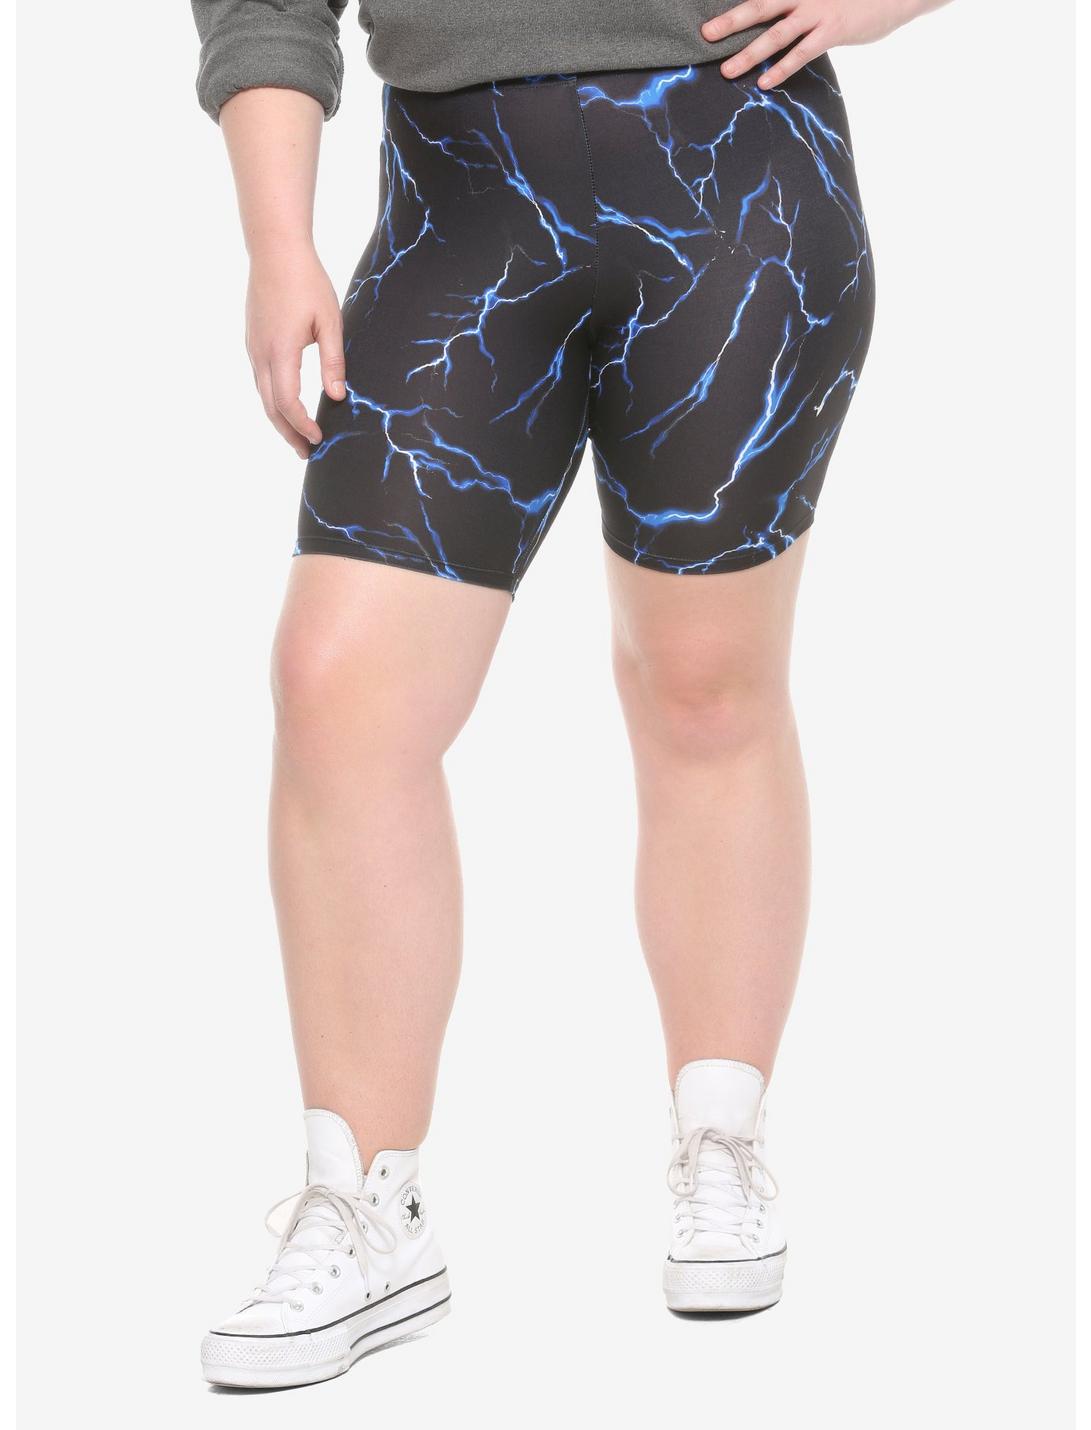 Blue Lightning Girls Bike Shorts Plus Size, BLACK, hi-res